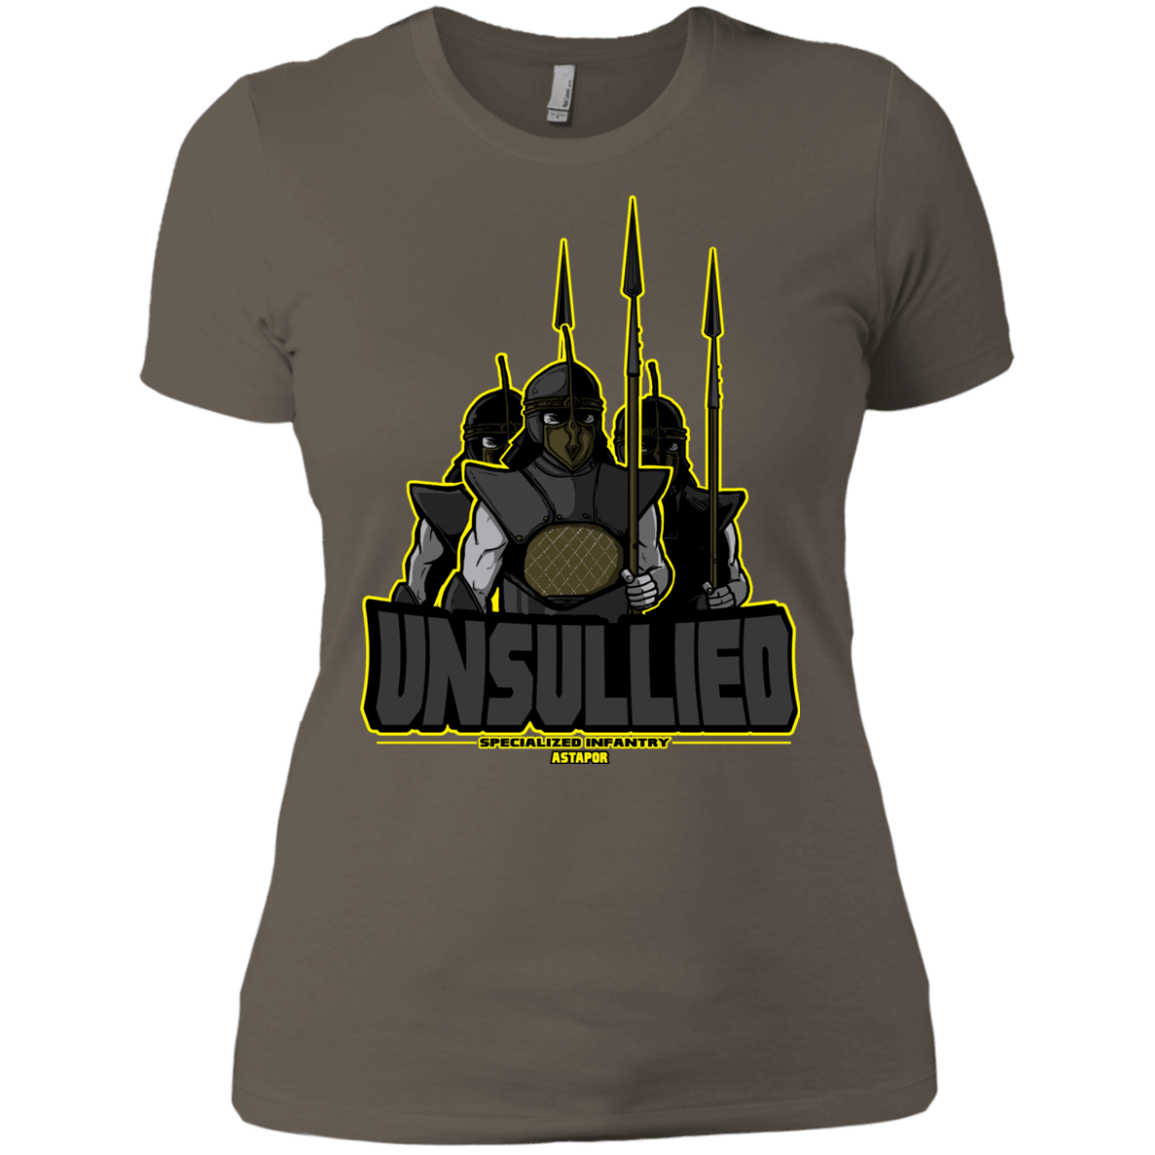 Specialized Infantry Women's Premium T-Shirt